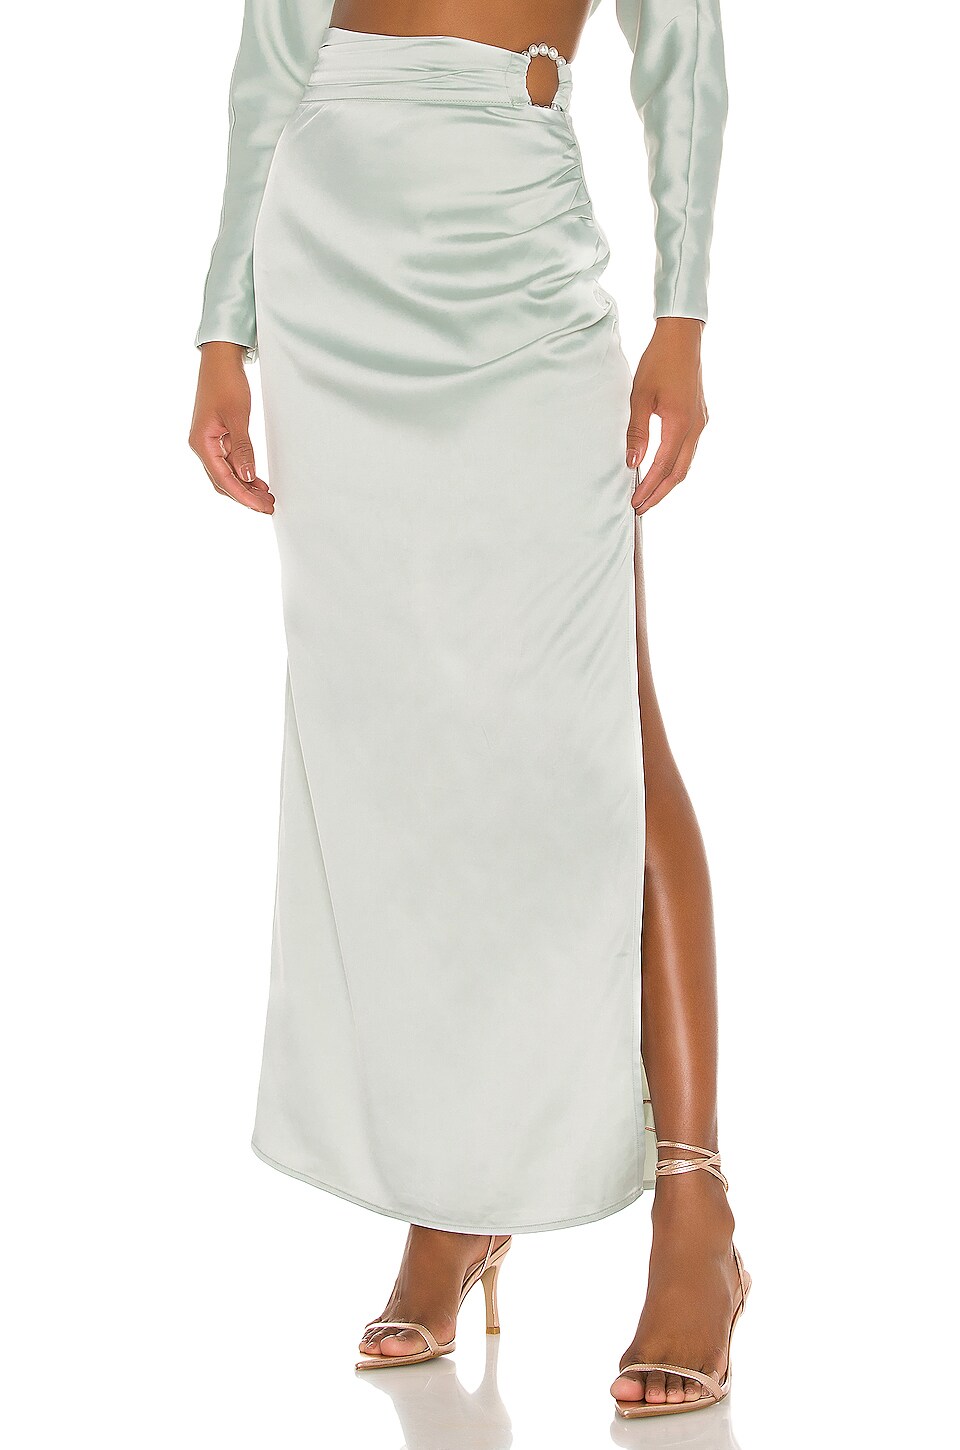 white maxi skirt with slits